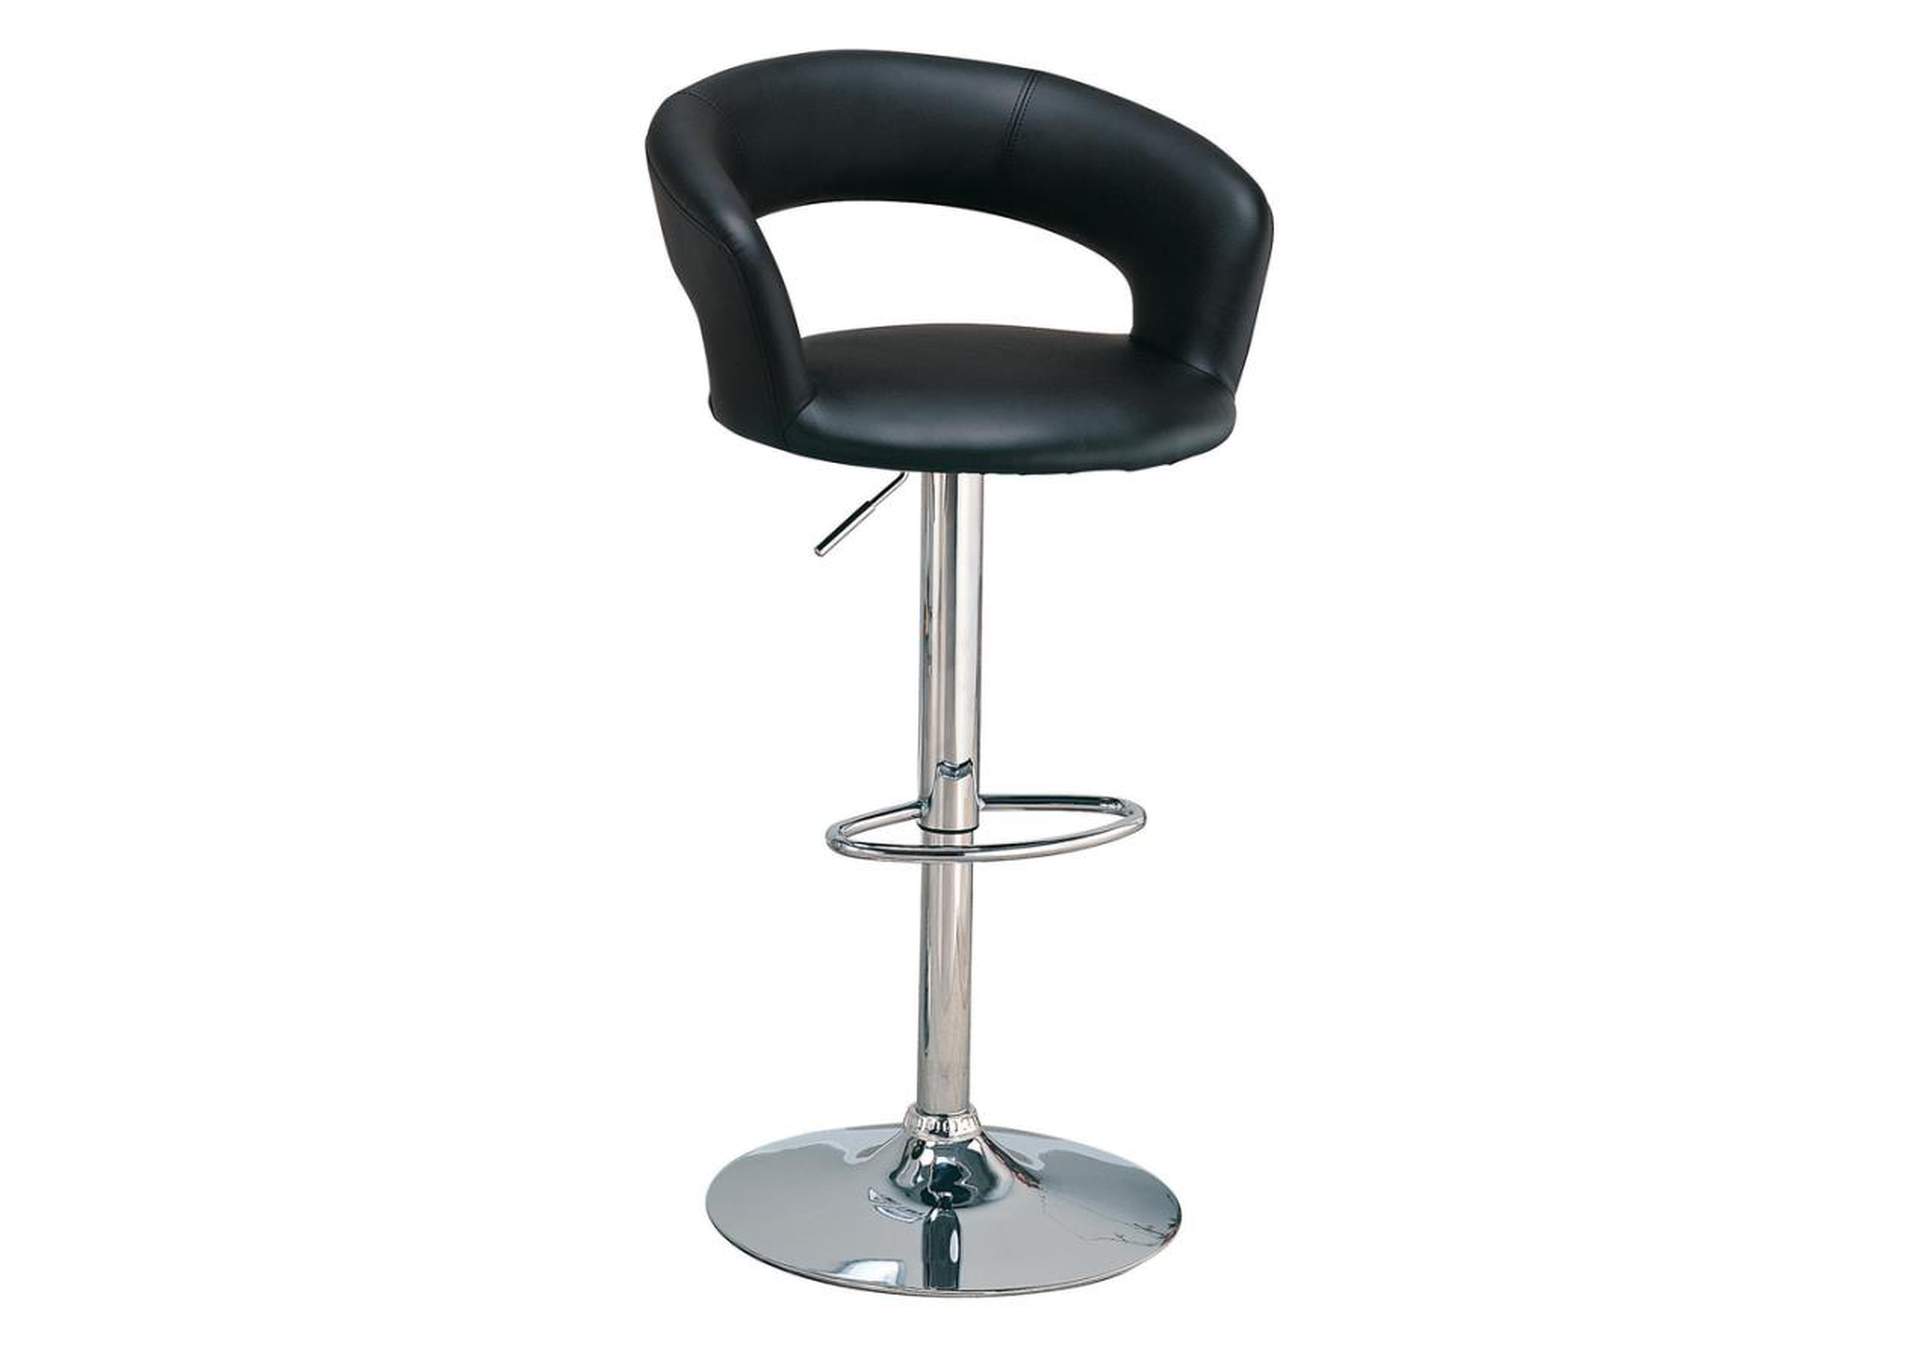 29" Adjustable Height Bar Stool Black And Chrome,Coaster Furniture